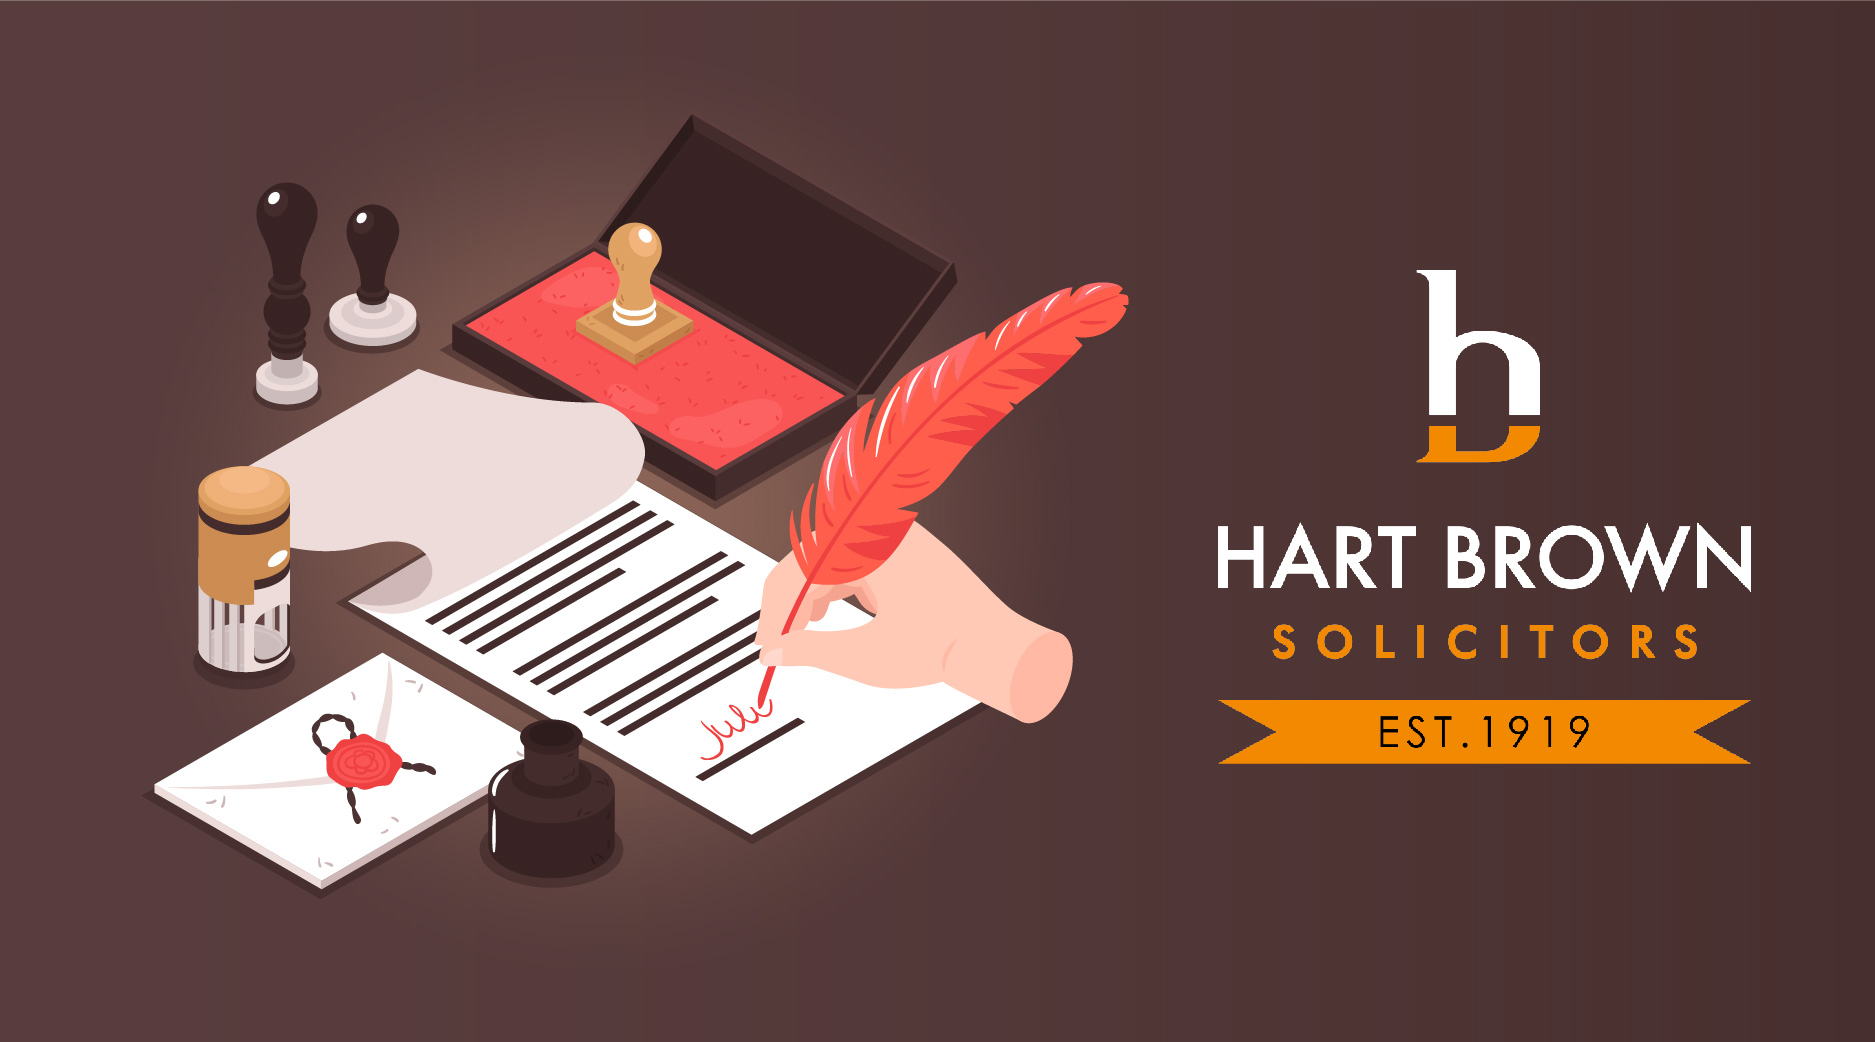 Hart brown solicitors